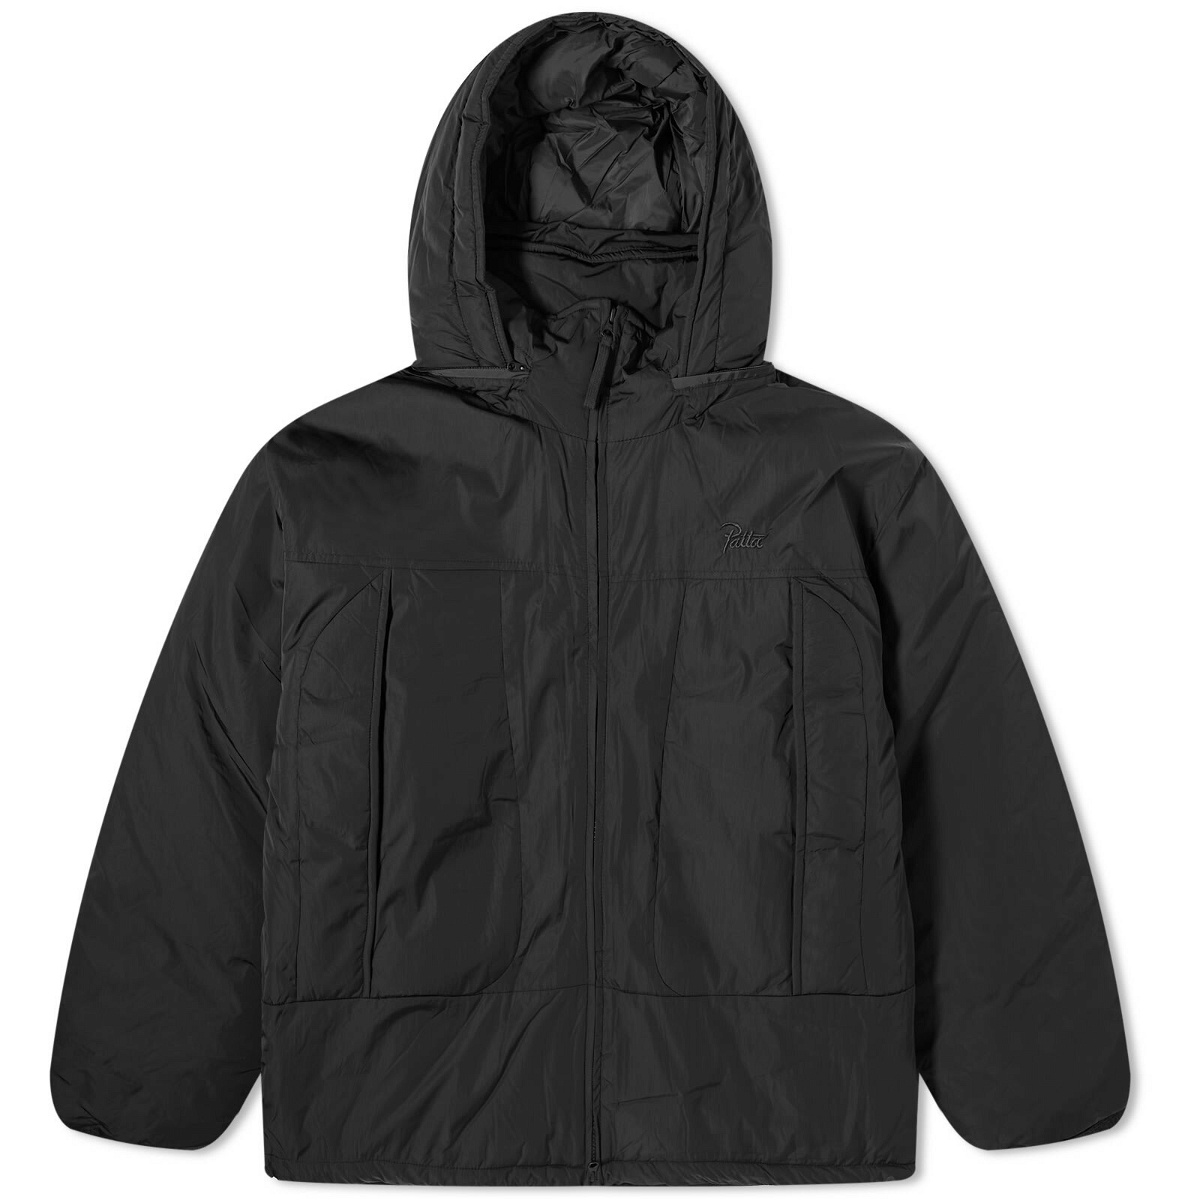 Patta Men's Primaloft Puffer Jacket in Black Patta